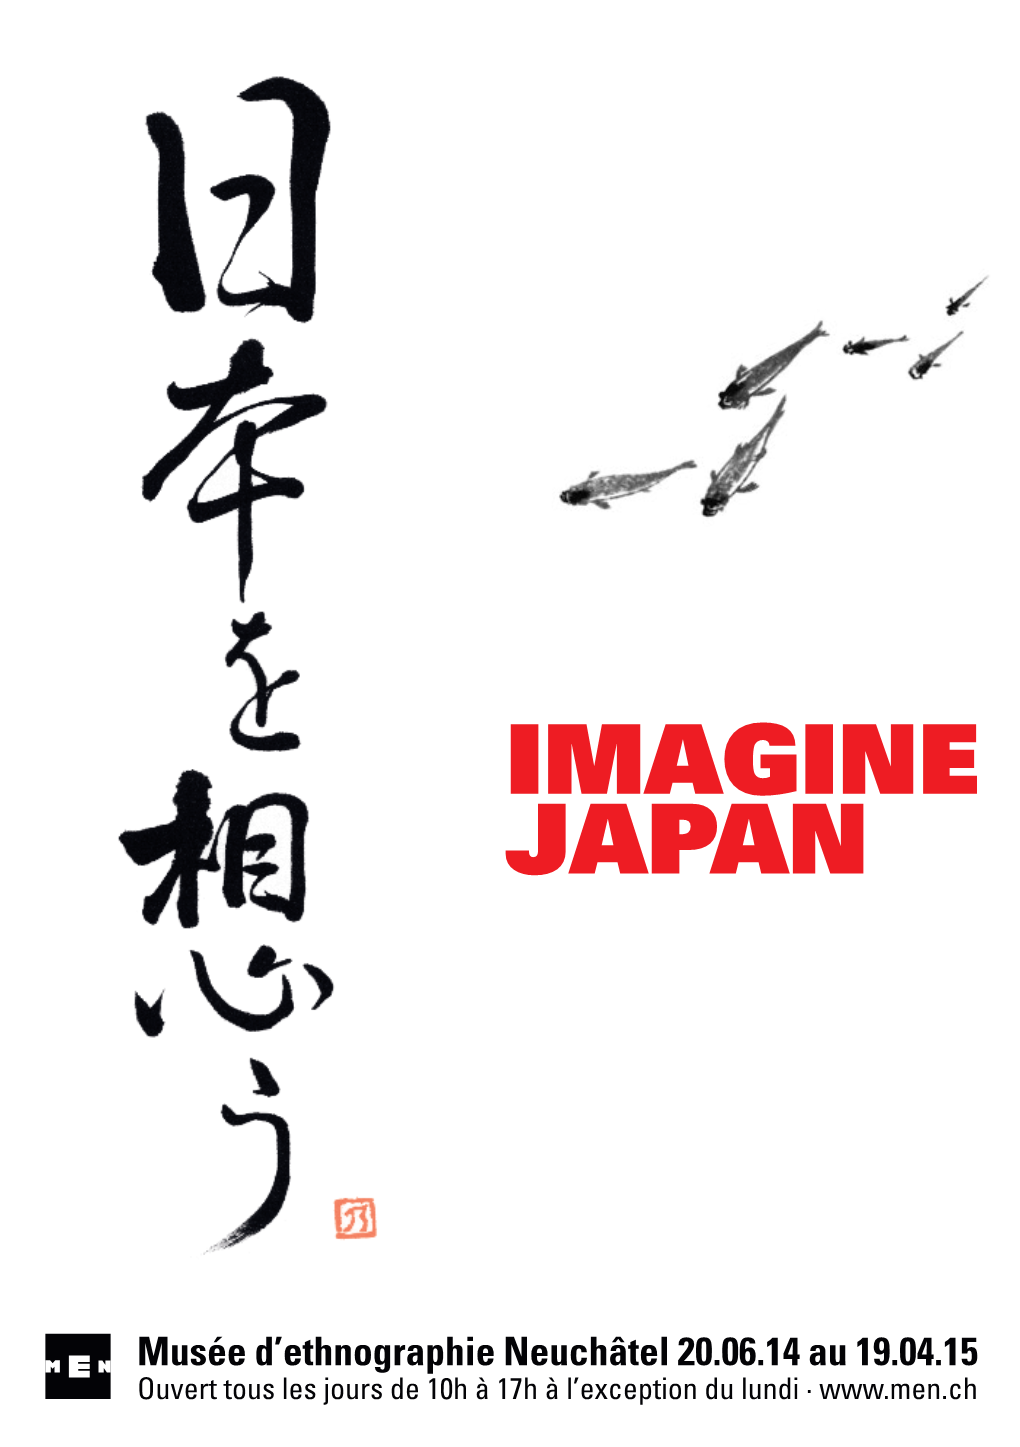 Imagine Japan